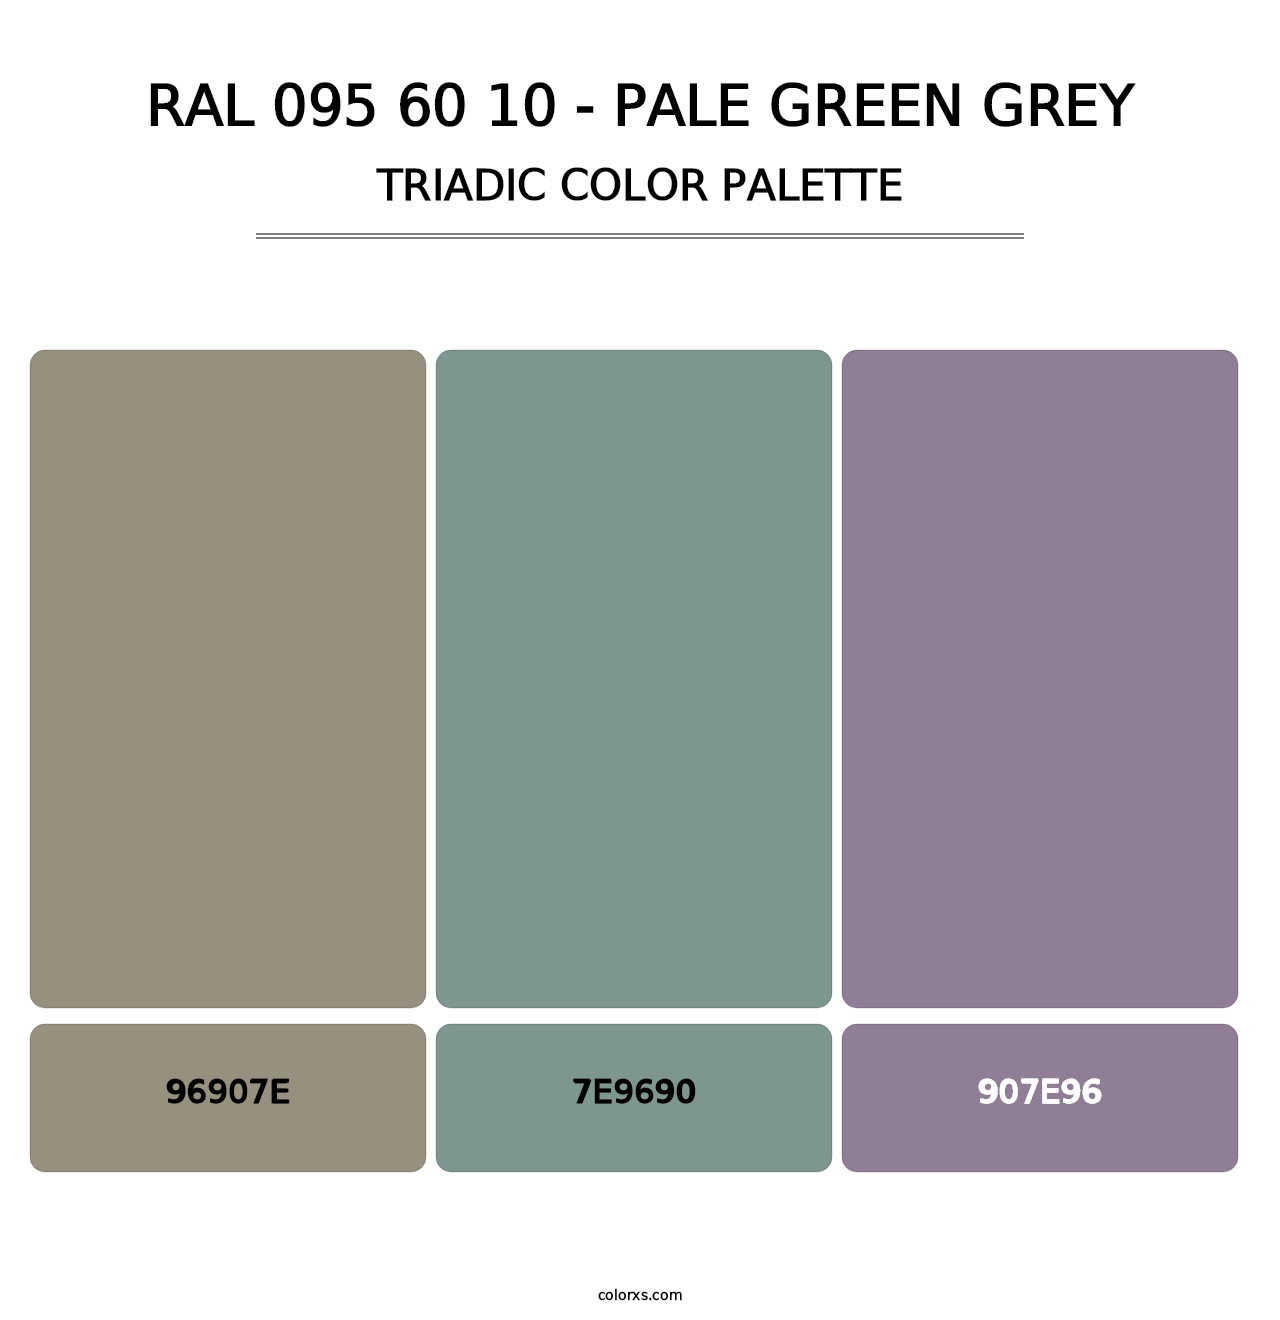 RAL 095 60 10 - Pale Green Grey - Triadic Color Palette